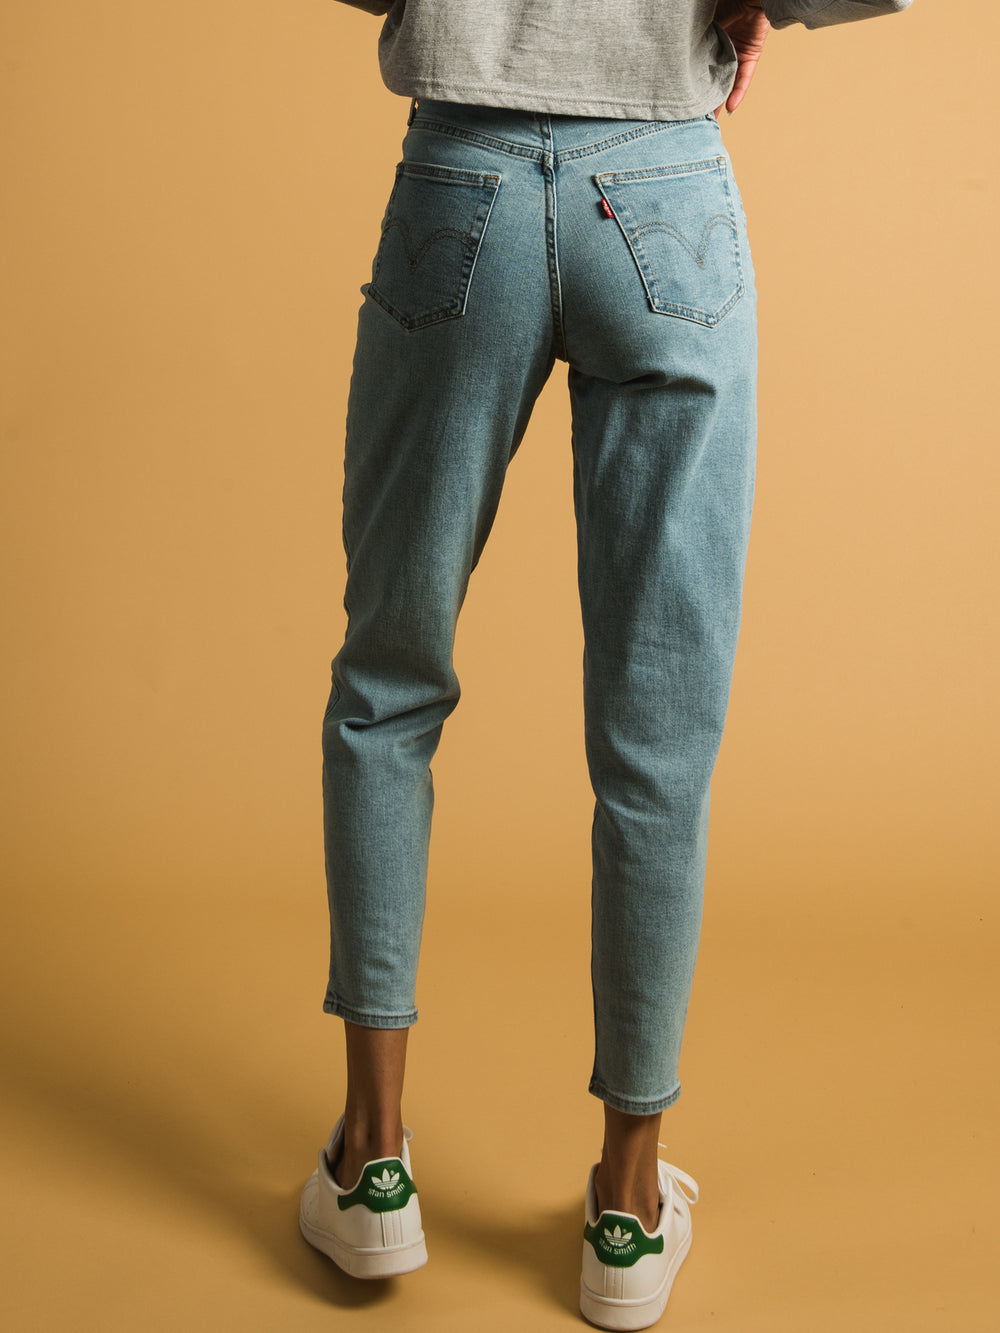 Levi's Original Women's High-Waisted Mom Jeans